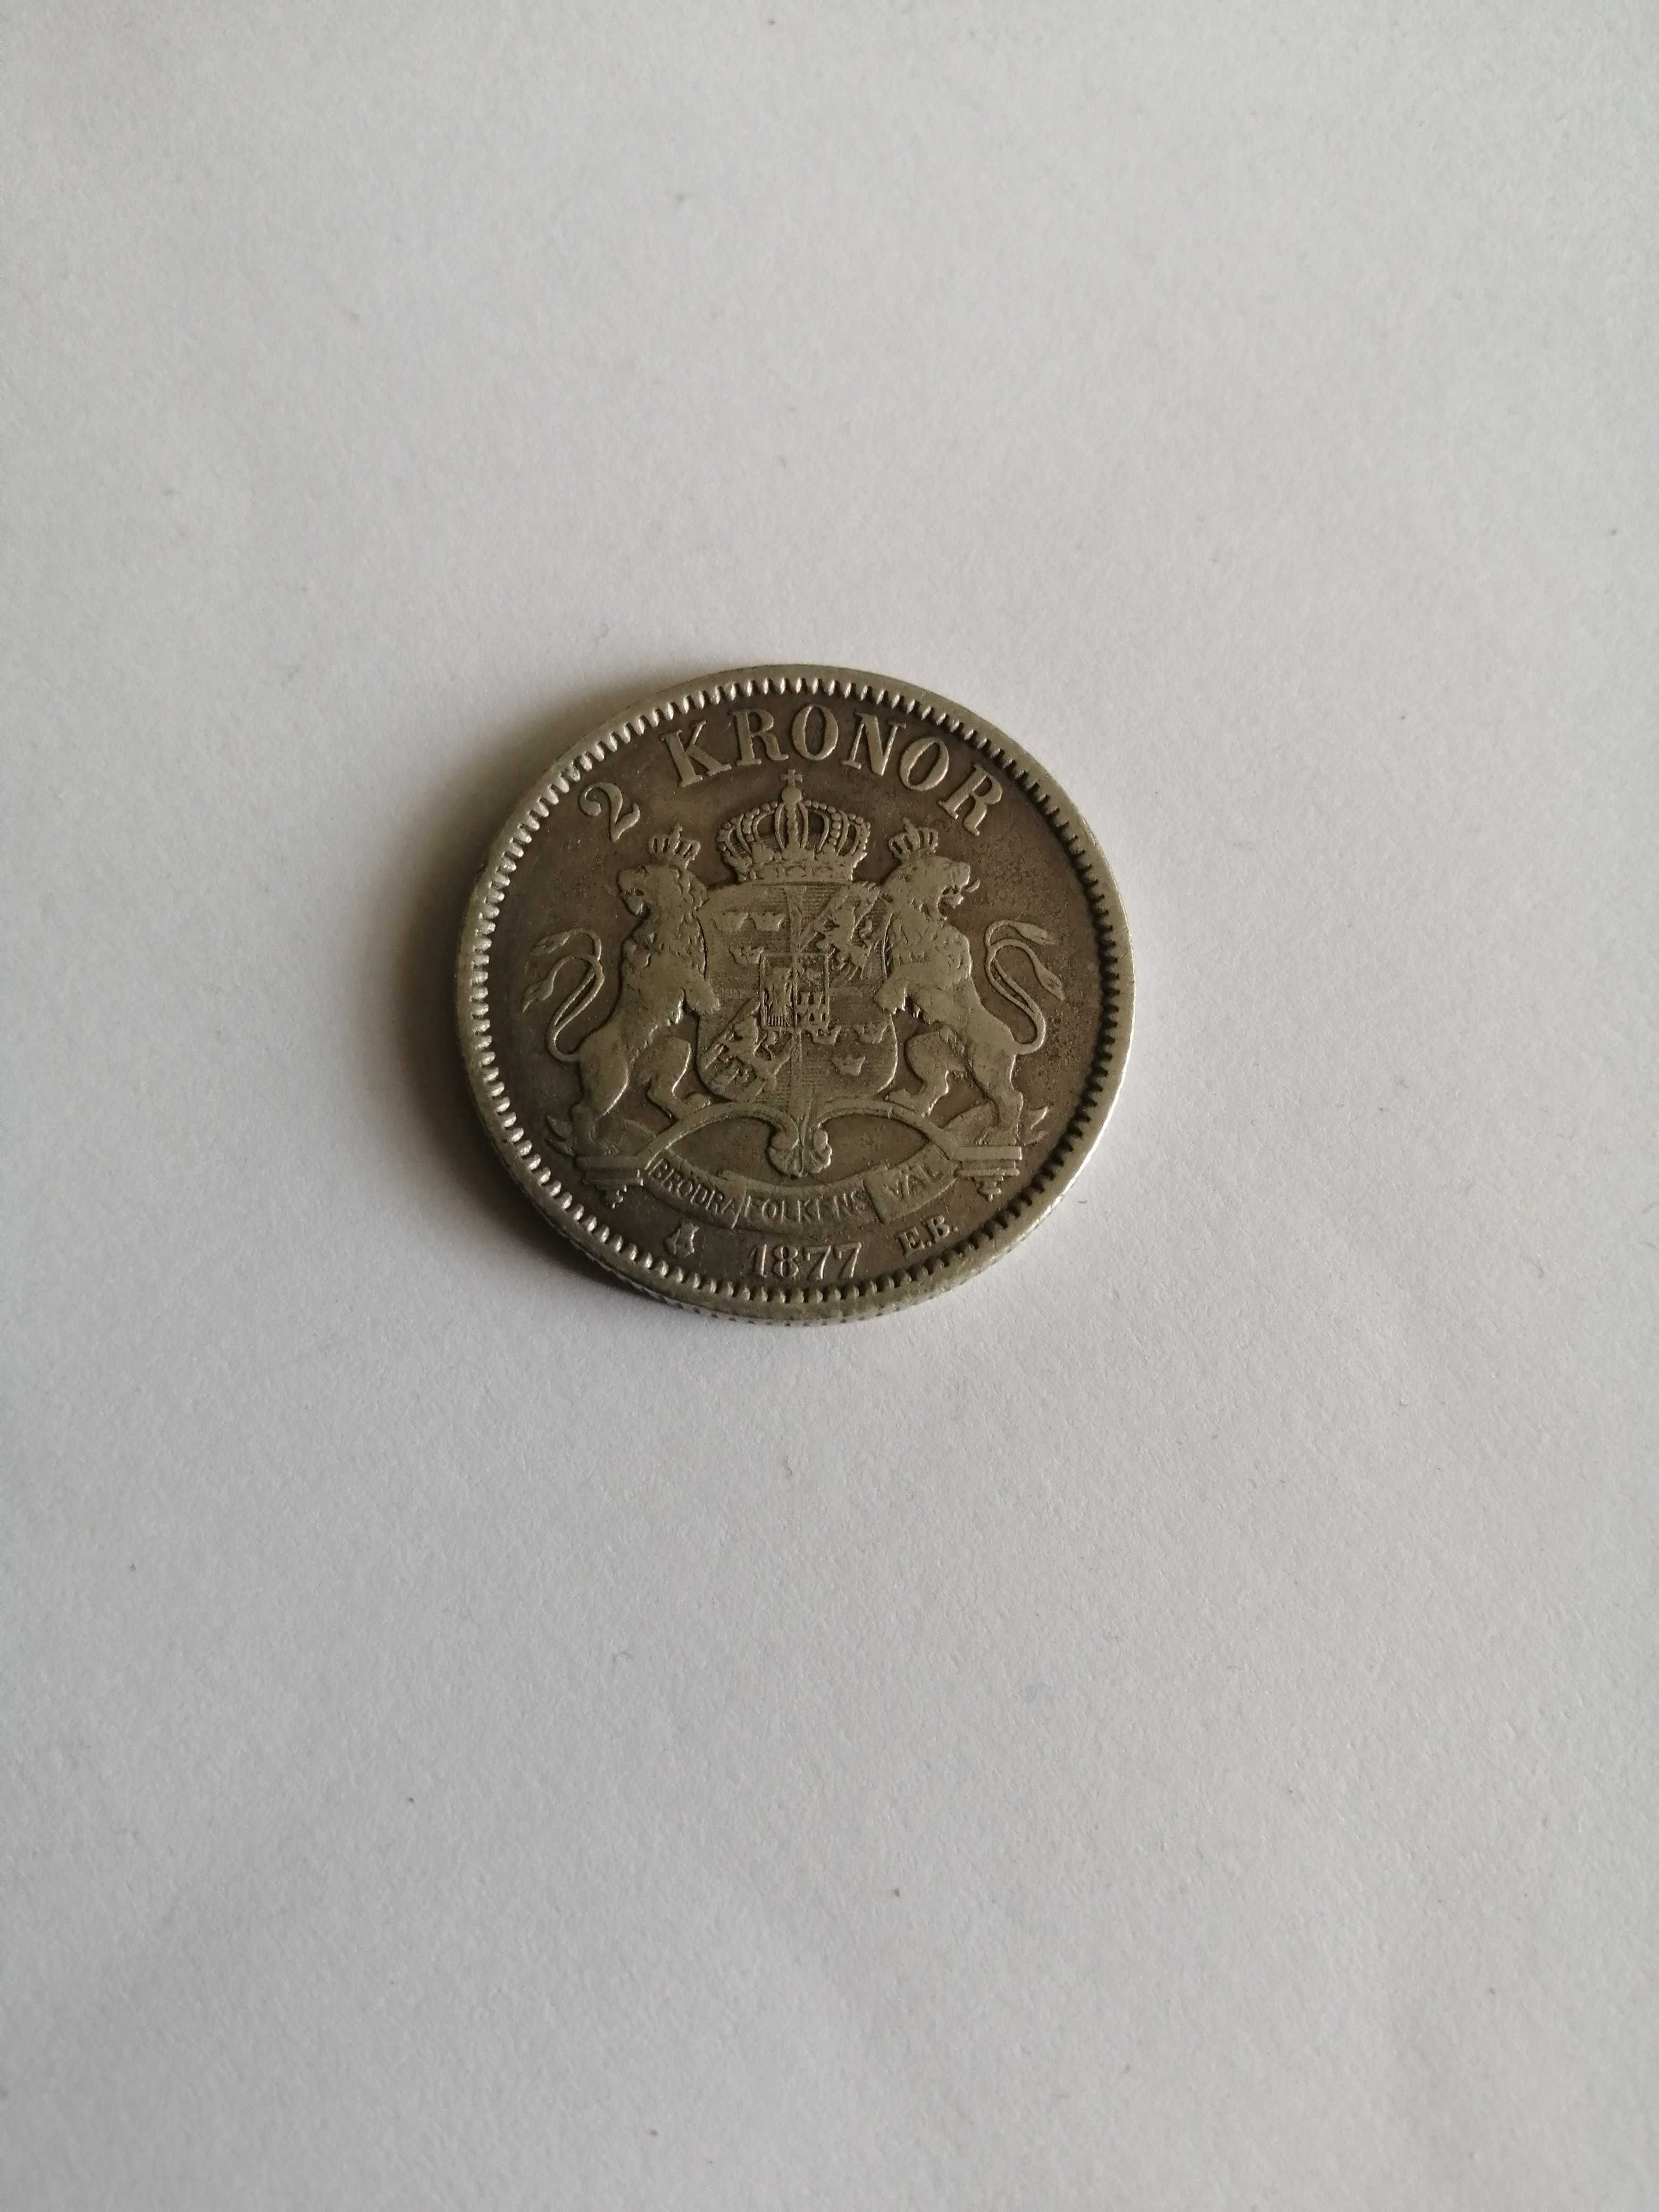 Srebrna moneta 2 korony 1877 Szwecja, Oscar II, rzadka,piękna 2 Kronor